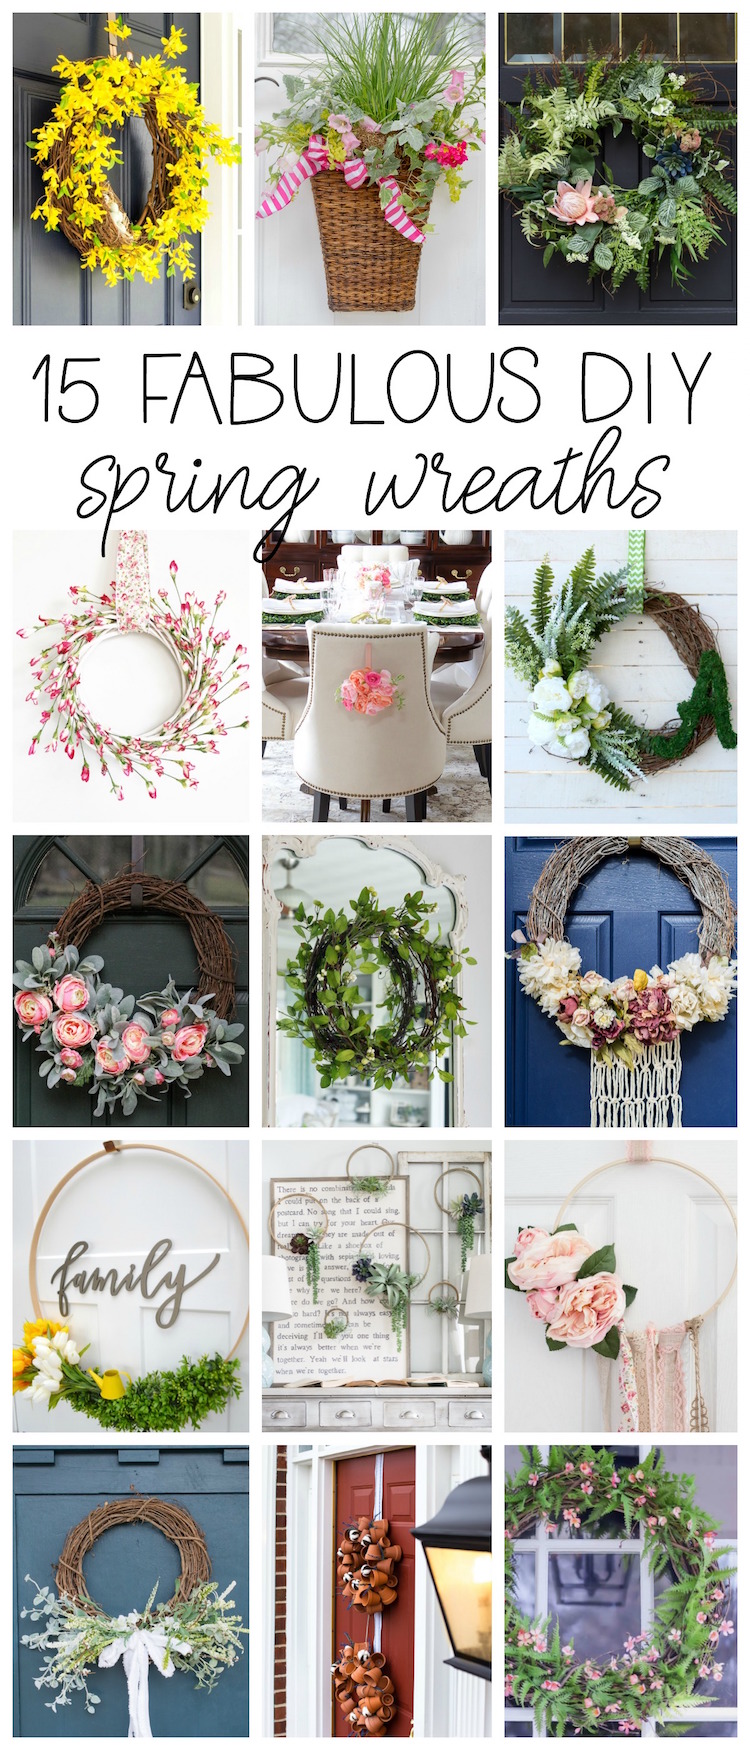 15 fabulous DIY spring wreaths poster.